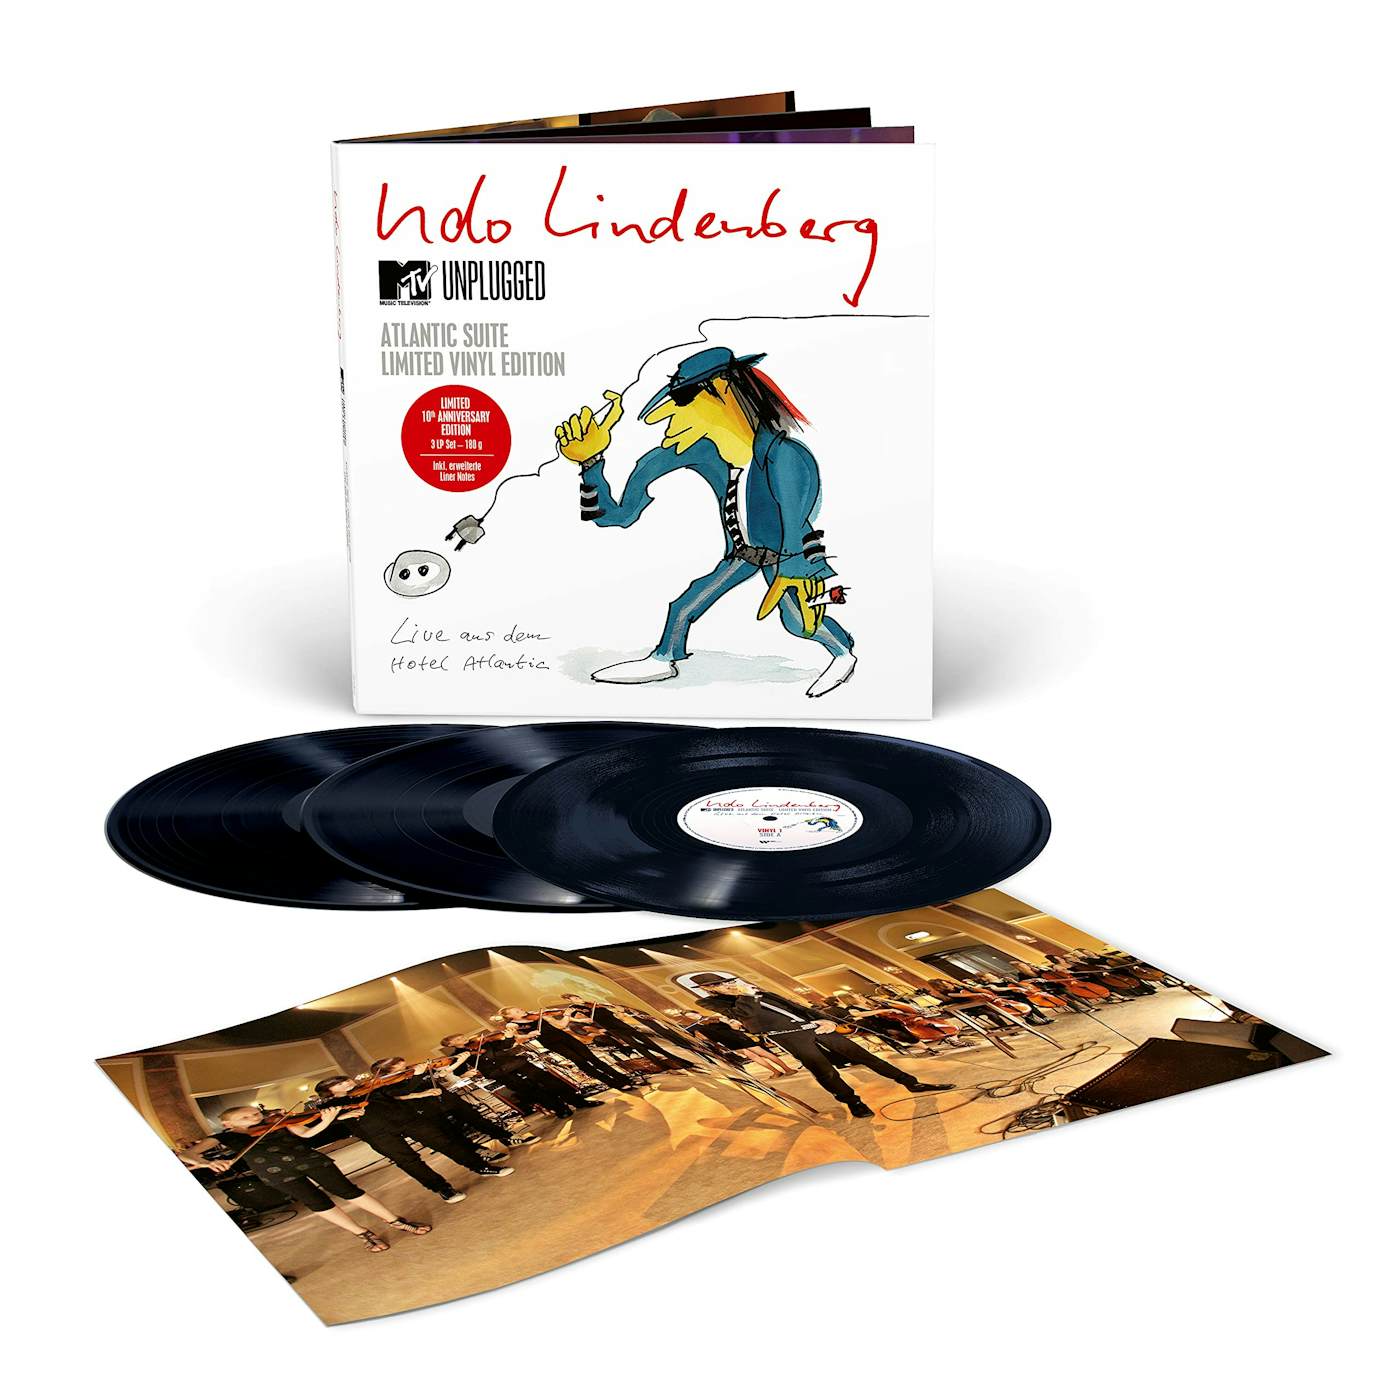 Udo Lindenberg MTV UNPLUGGED / ATLANTIC SUITE Vinyl Record